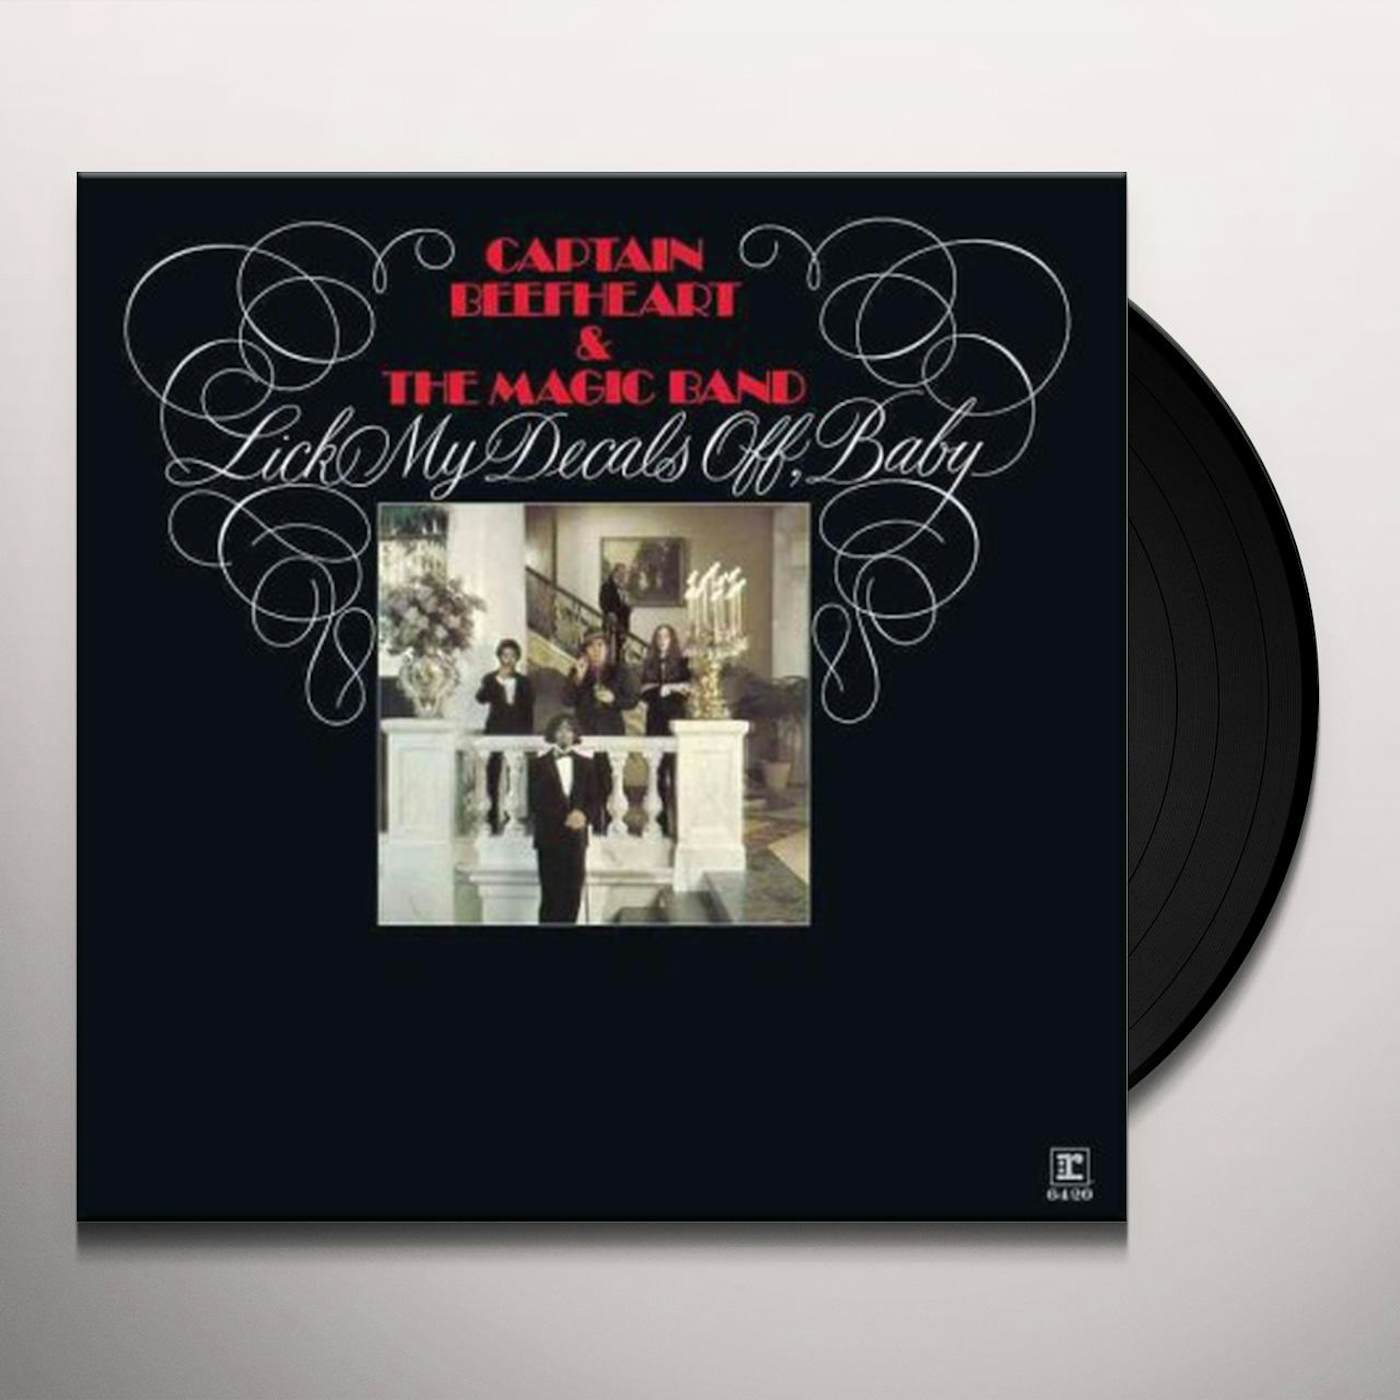 Captain Beefheart & His Magic Band LICK MY DECALS OFF BABY Vinyl Record